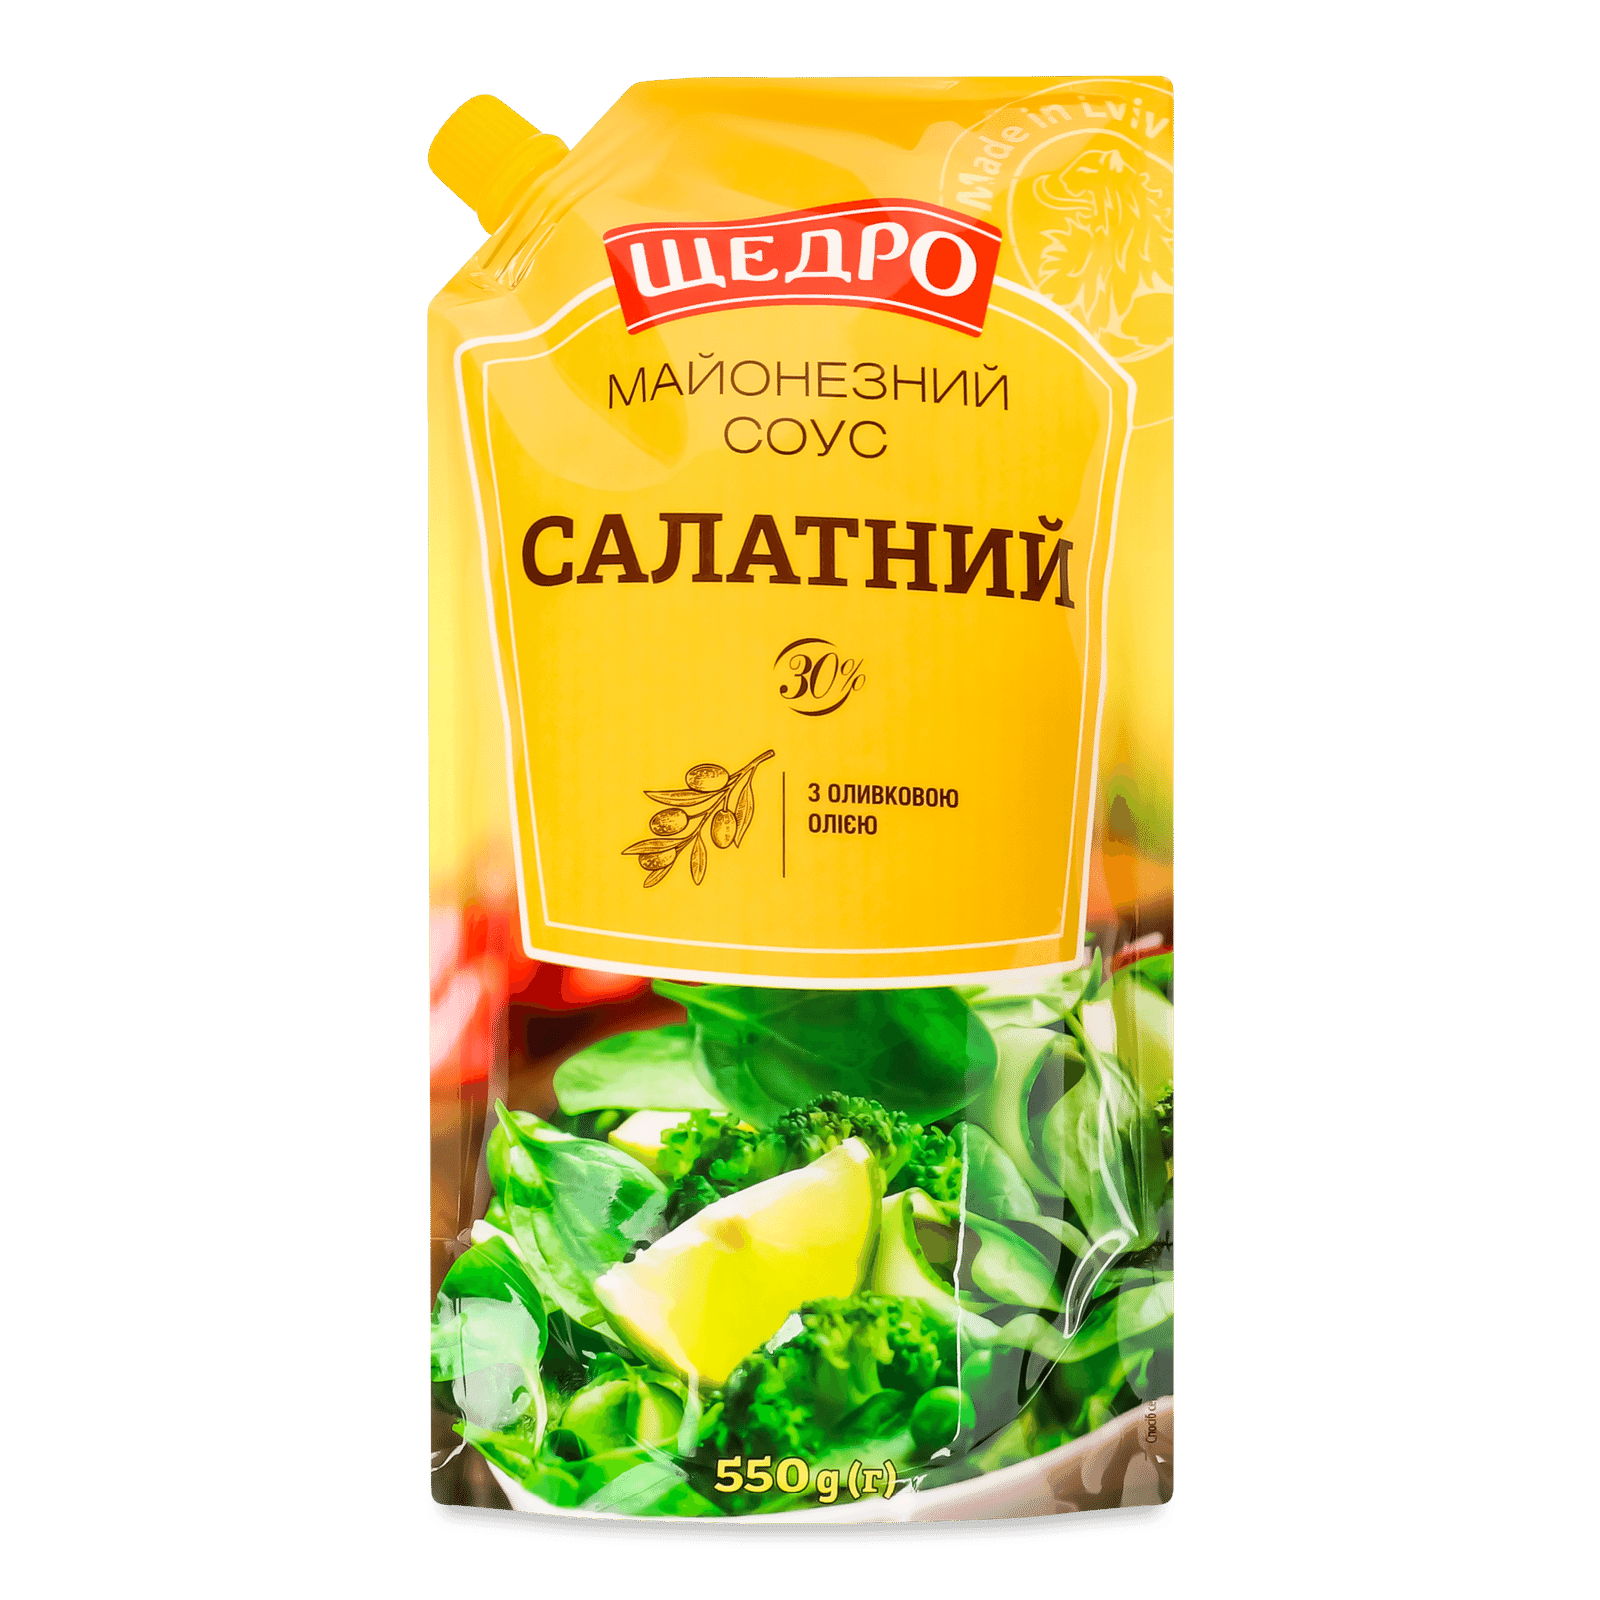 Соус «Щедро» салатний майонезний 30% - 1